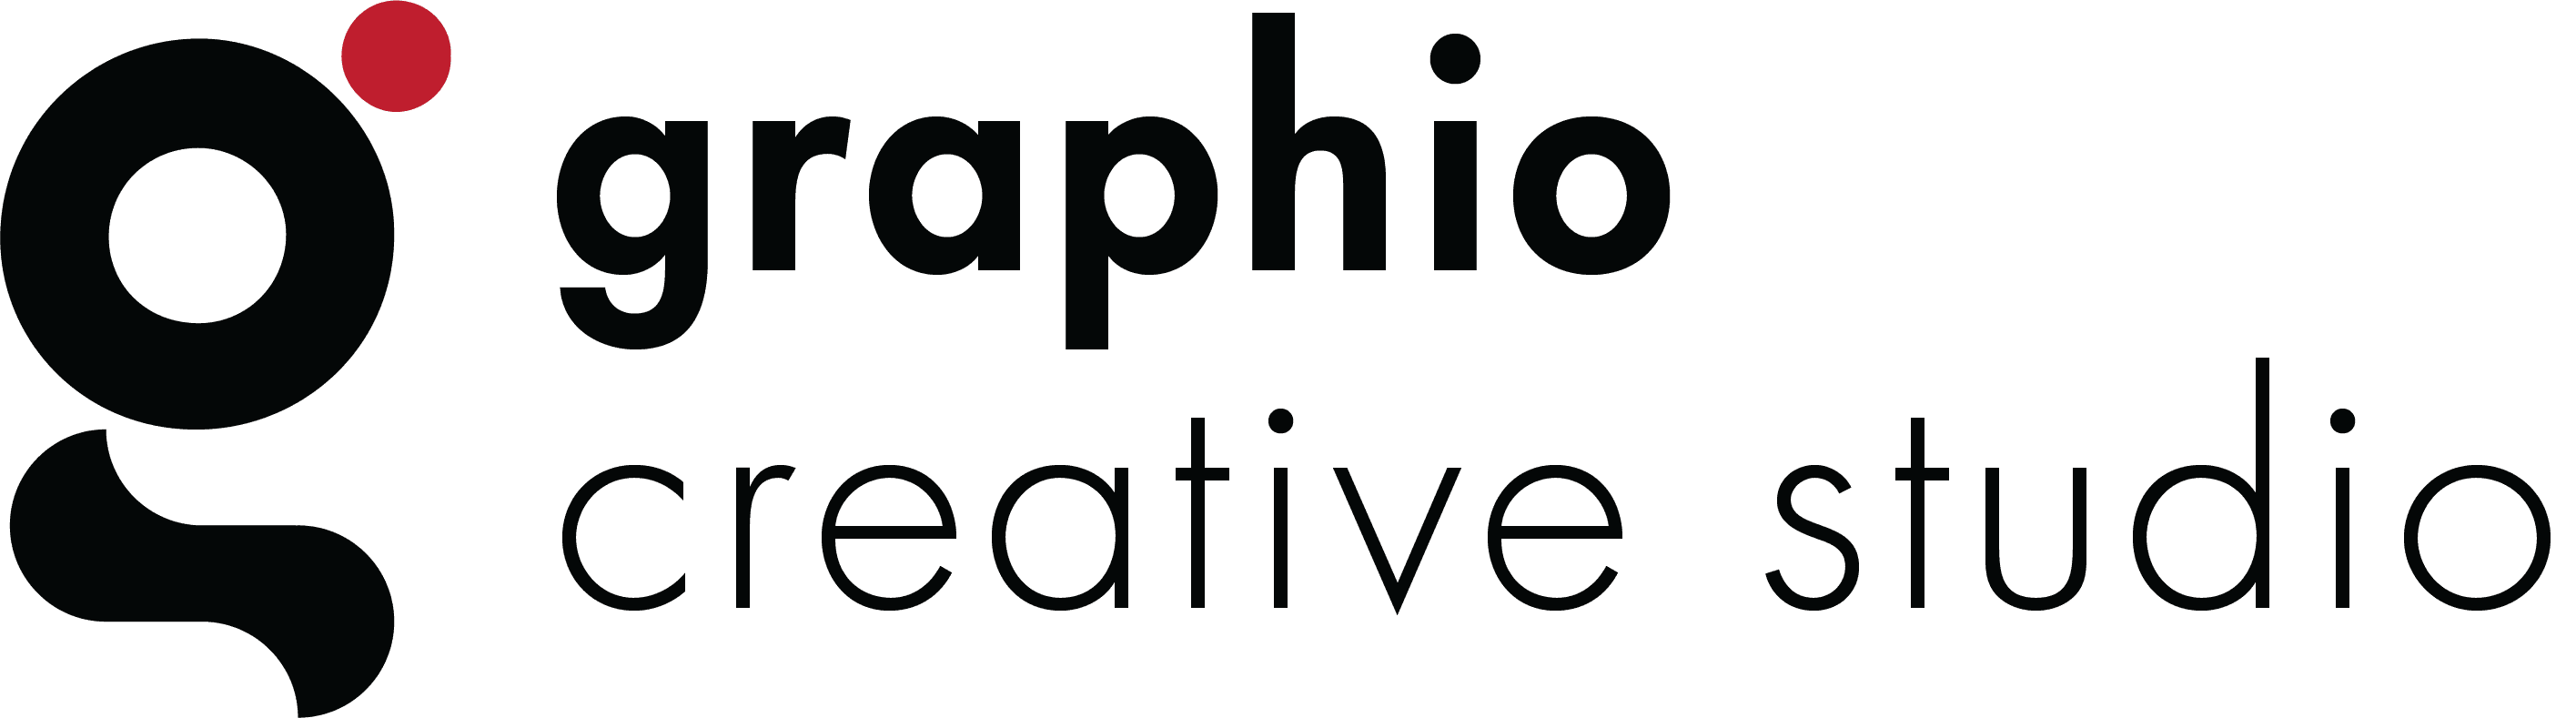 Graphio Creative Studio logo